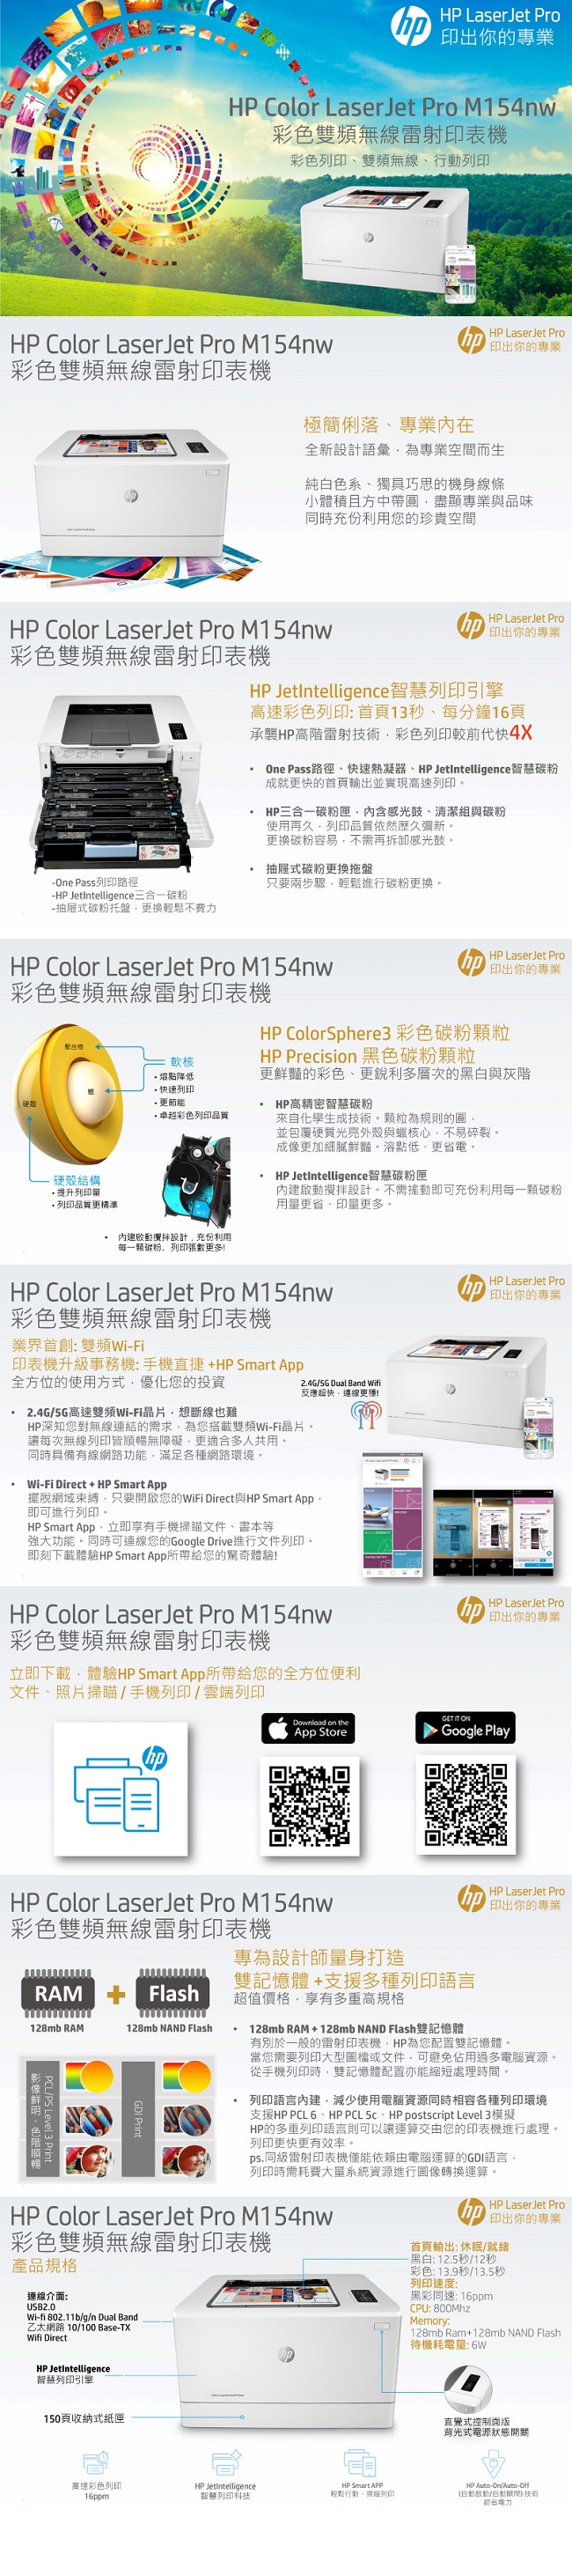 HP Color LaserJet Pro M154nw 雷射印表機